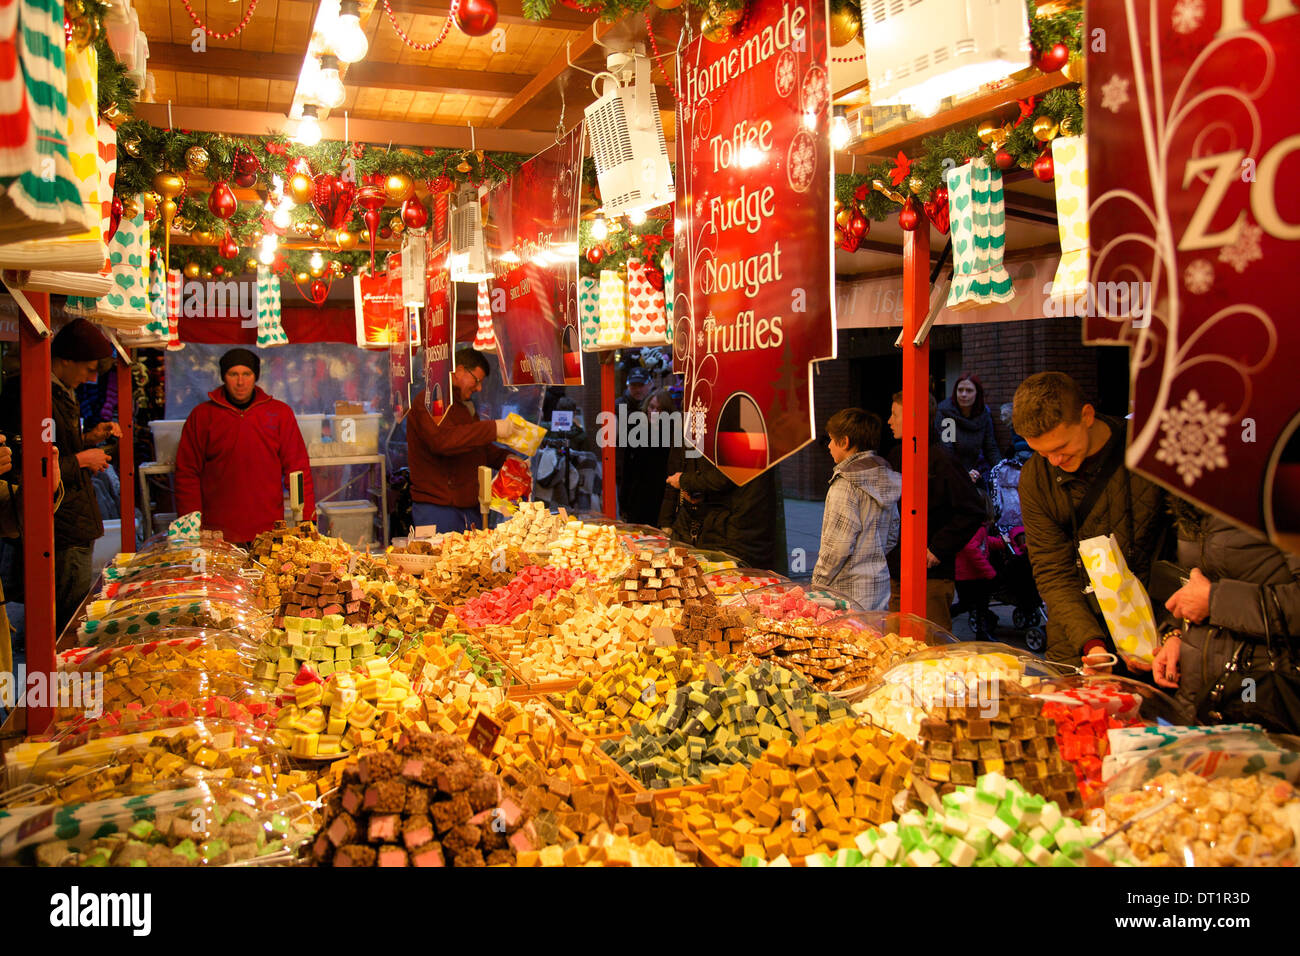 Le caramel fudge stall, Marché de Noël, Albert Square, Manchester, Angleterre, Royaume-Uni, Europe Banque D'Images